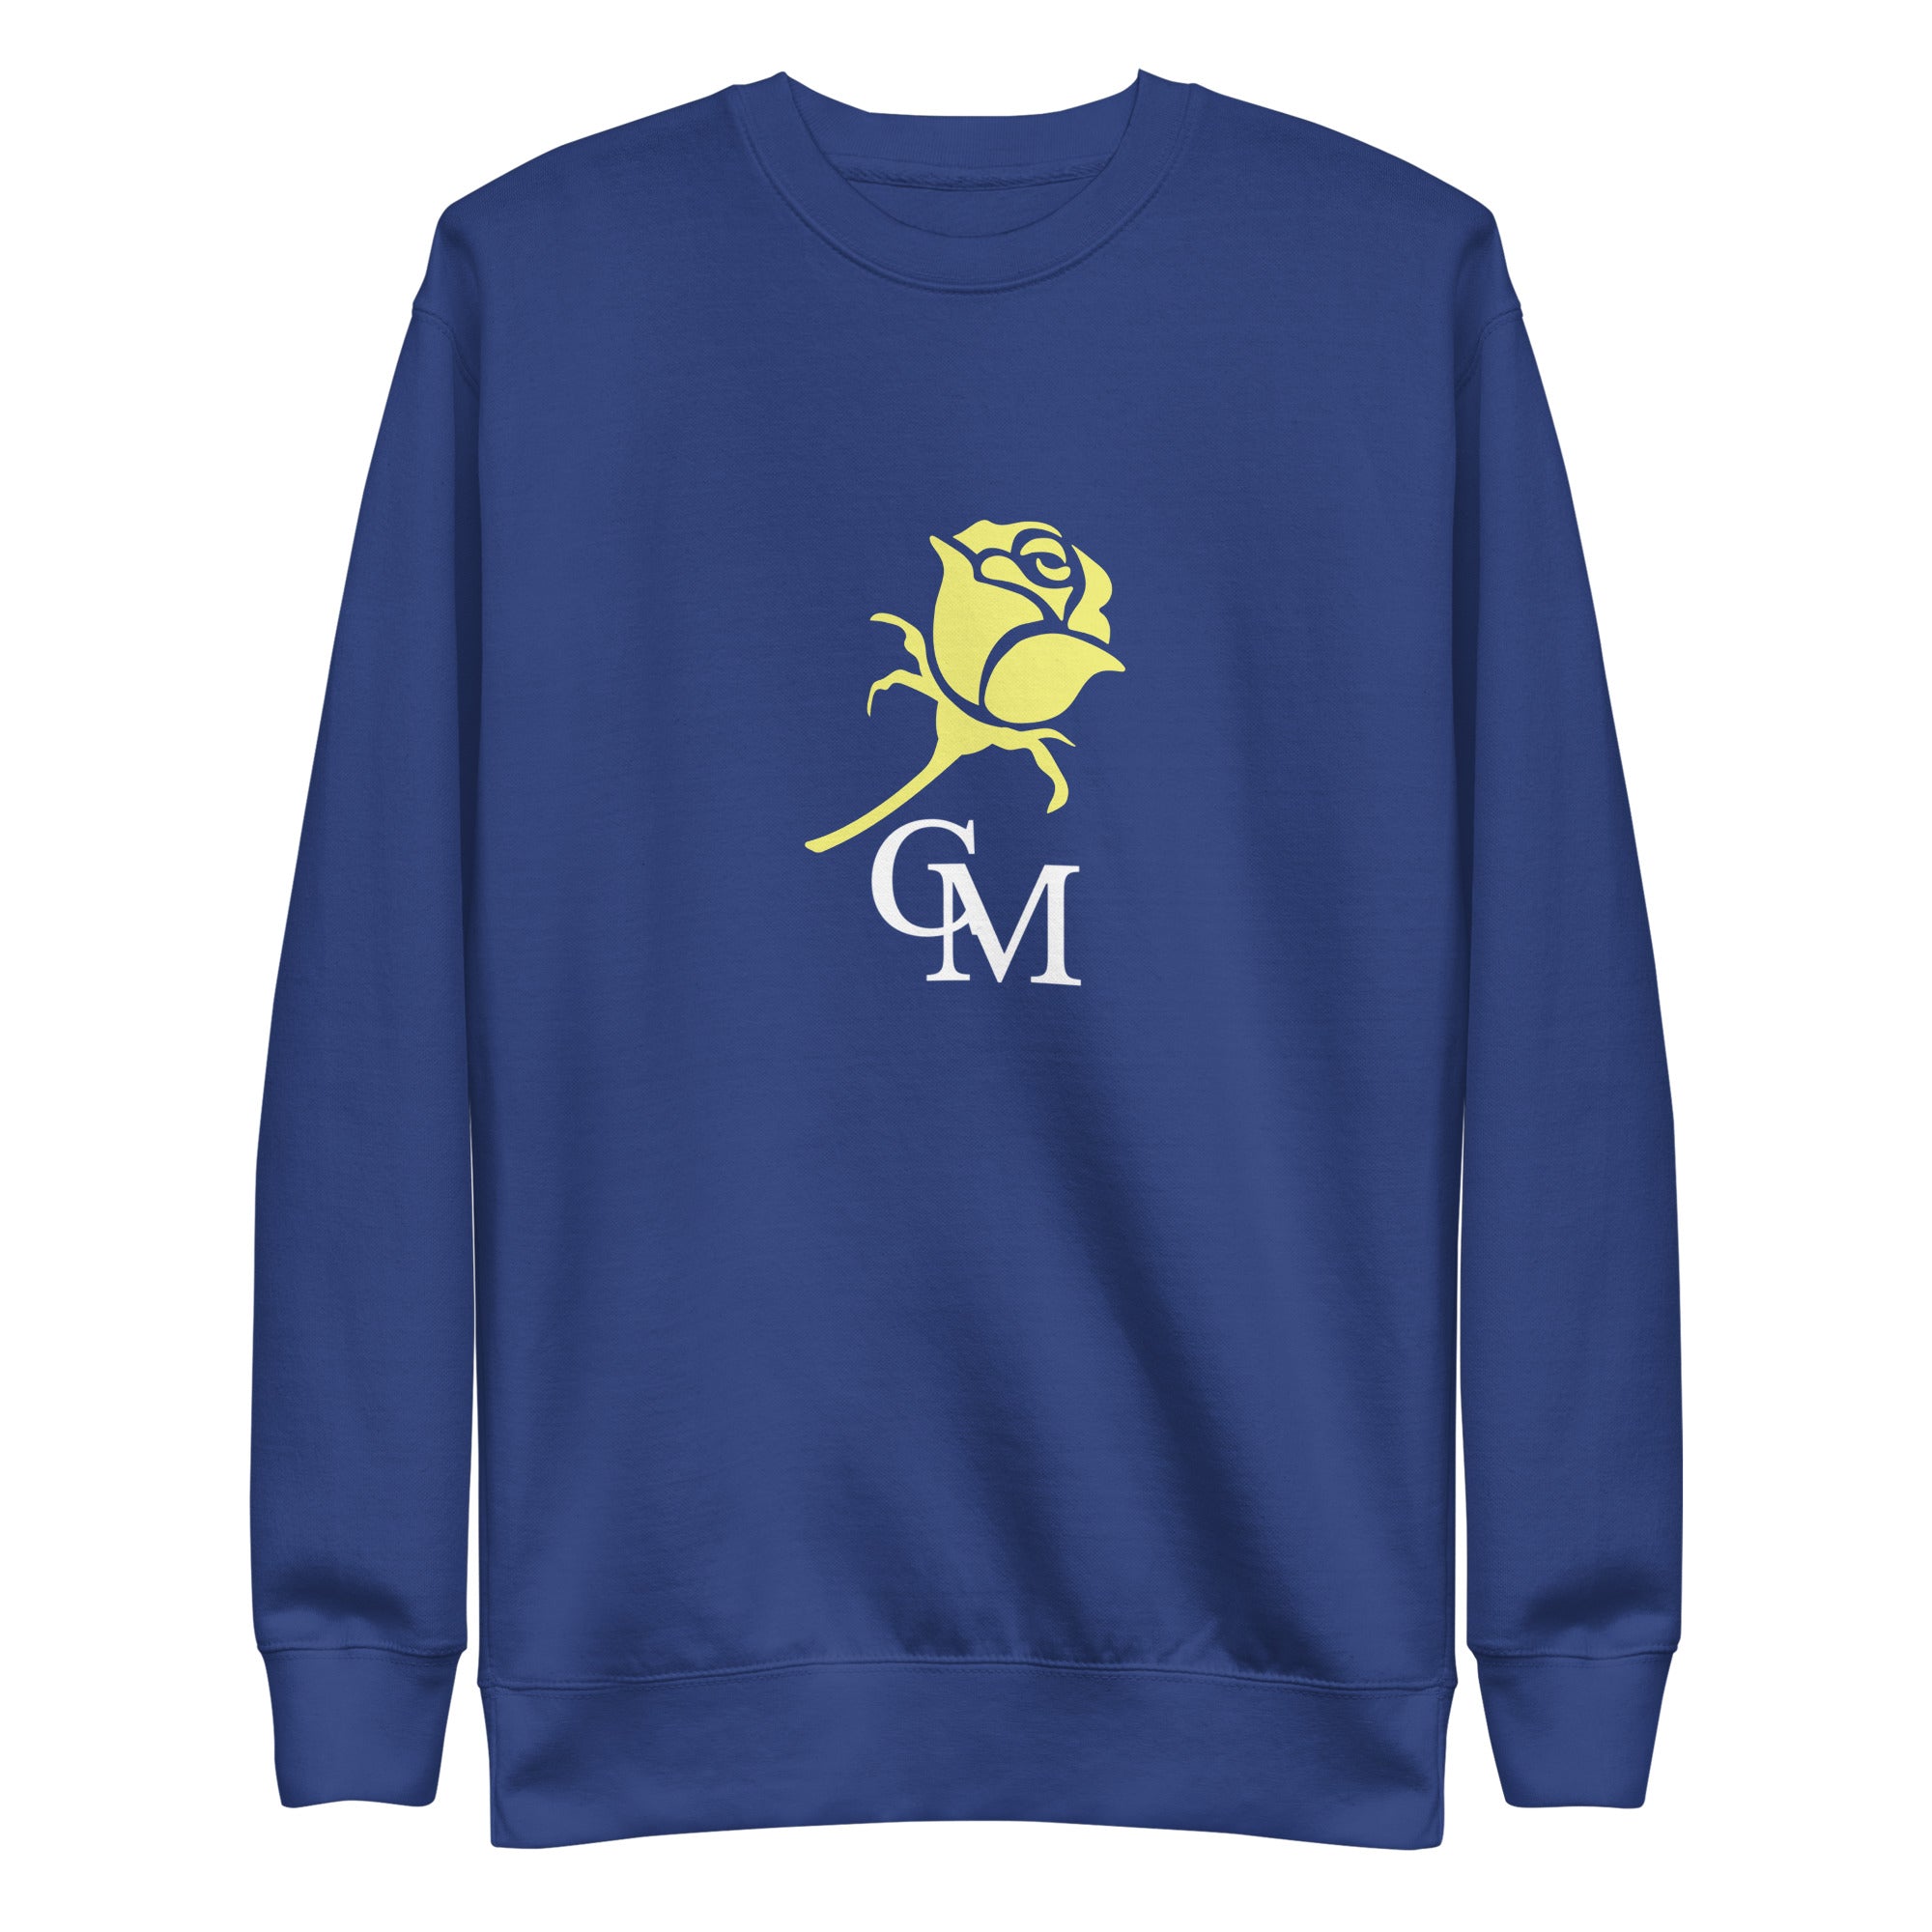 CM Yellow Rose Unisex Premium Sweatshirt